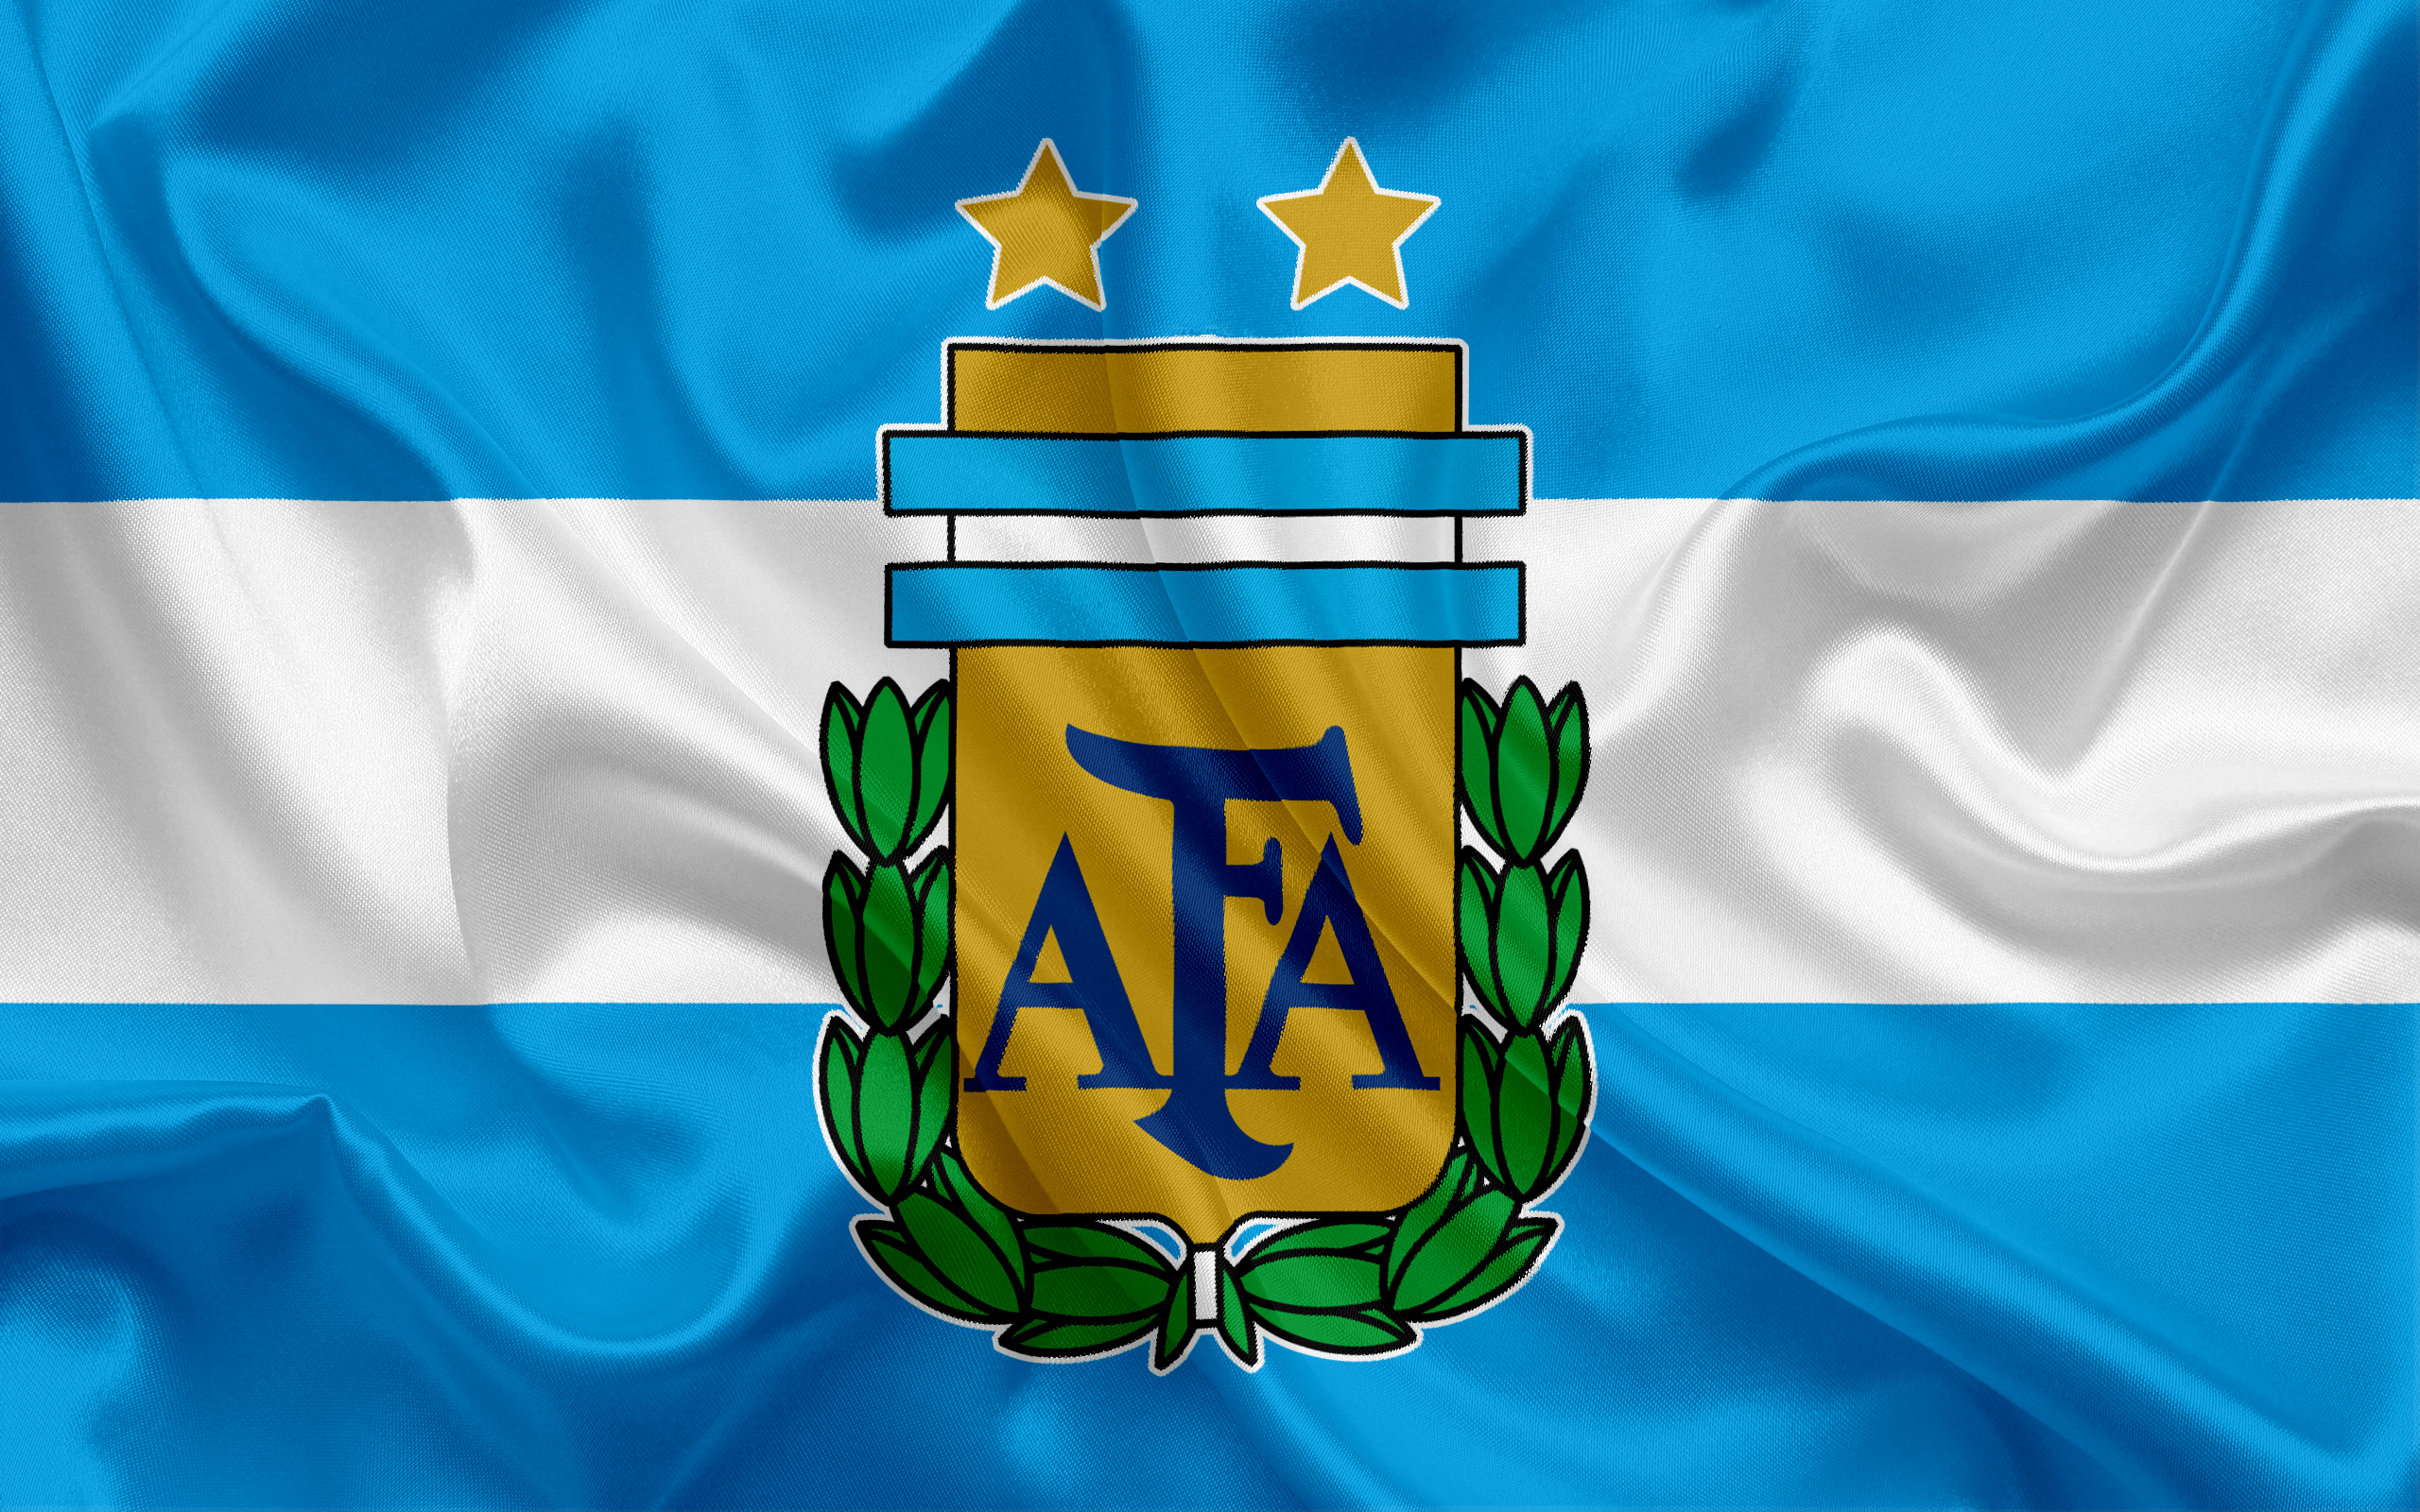 451465 descargar imagen argentina, selección argentina de fútbol, deporte, emblema, logo, fútbol: fondos de pantalla y protectores de pantalla gratis